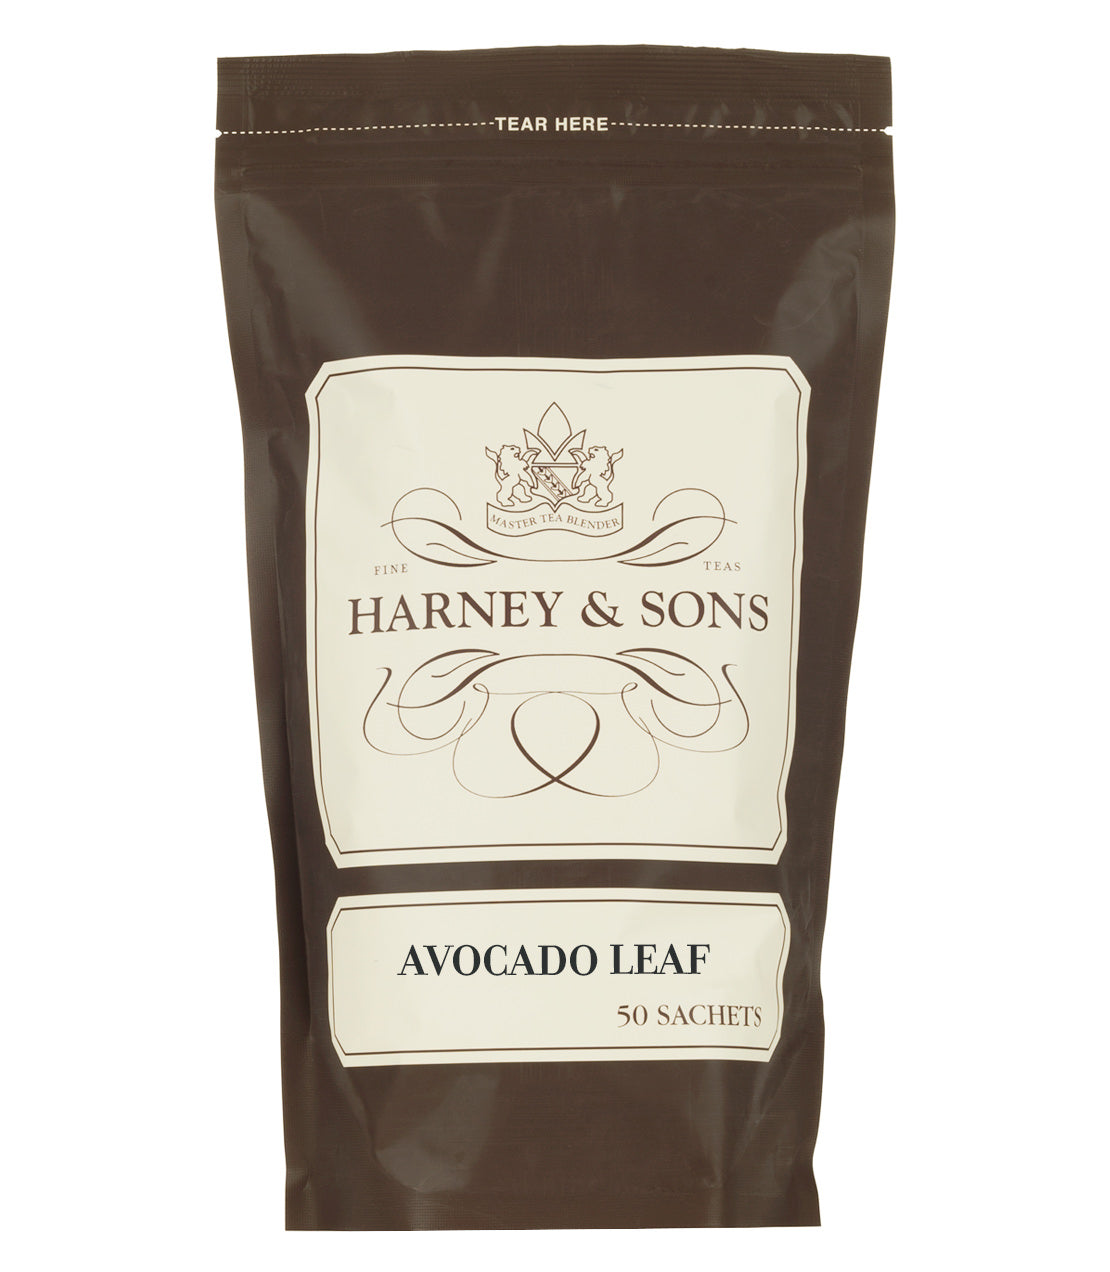 Avocado Leaf, Bag of 50 Sachet Bags - Sachets Bag of 50 Sachets - Harney & Sons Fine Teas